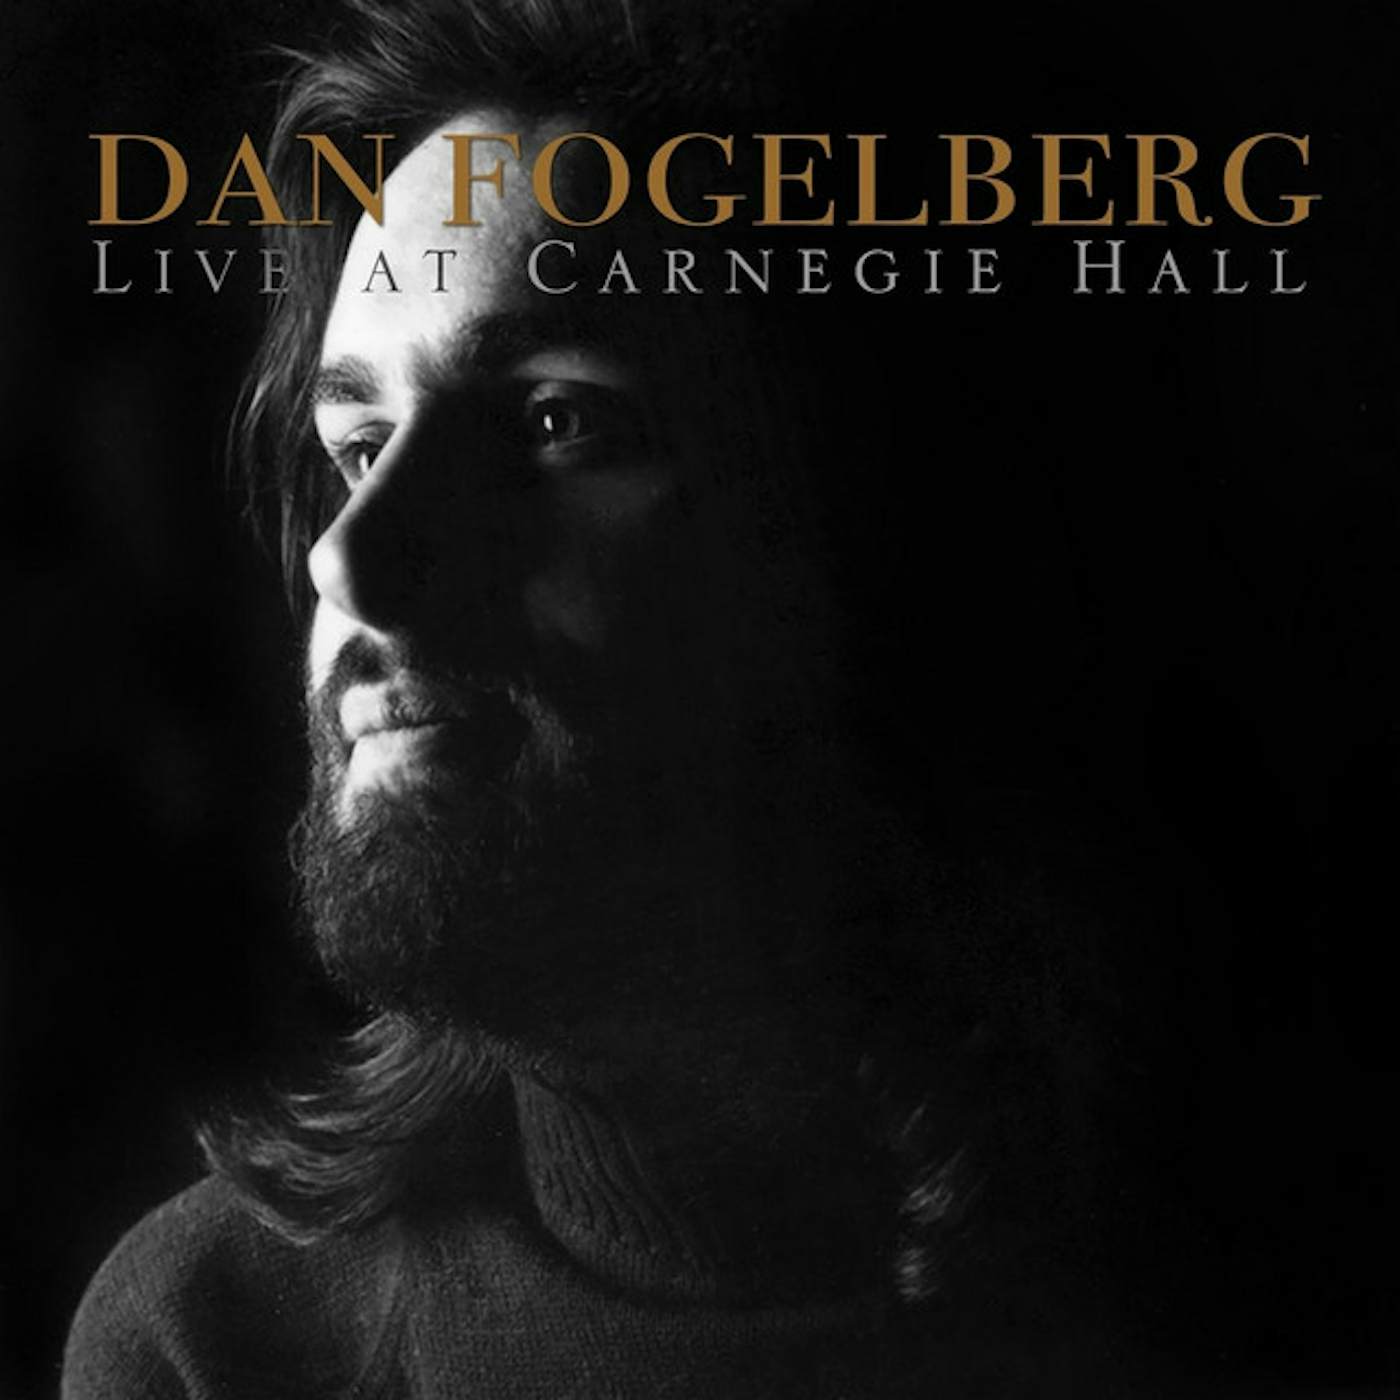 Dan Fogelberg Live At Carnegie Hall Vinyl Record